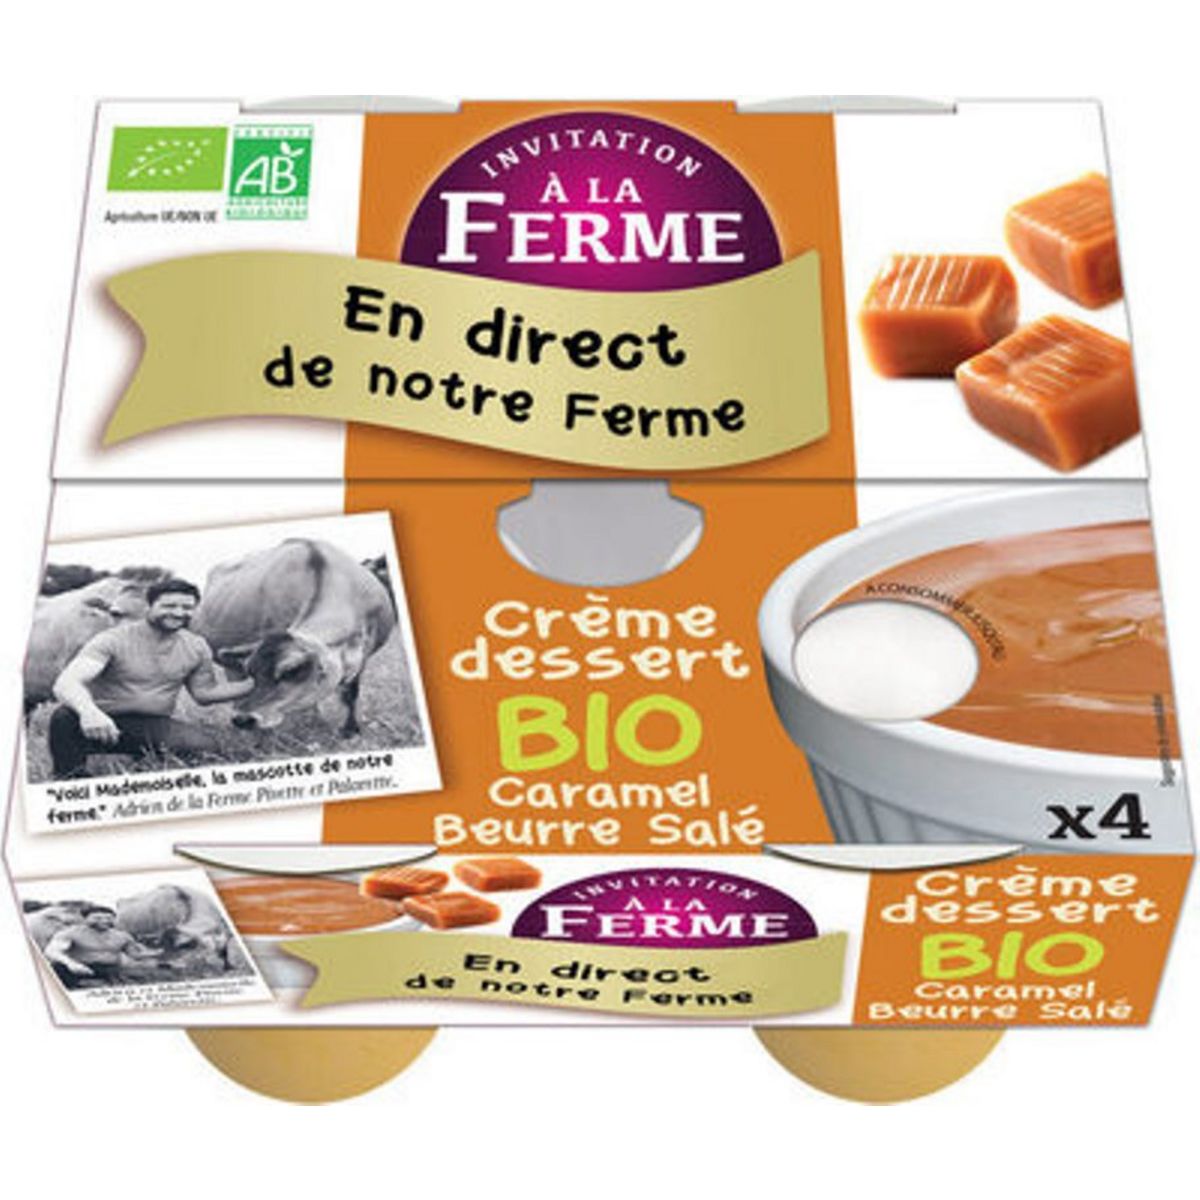 INVITATION A LA FERME Crème dessert au caramel beurre salé bio 4x100g